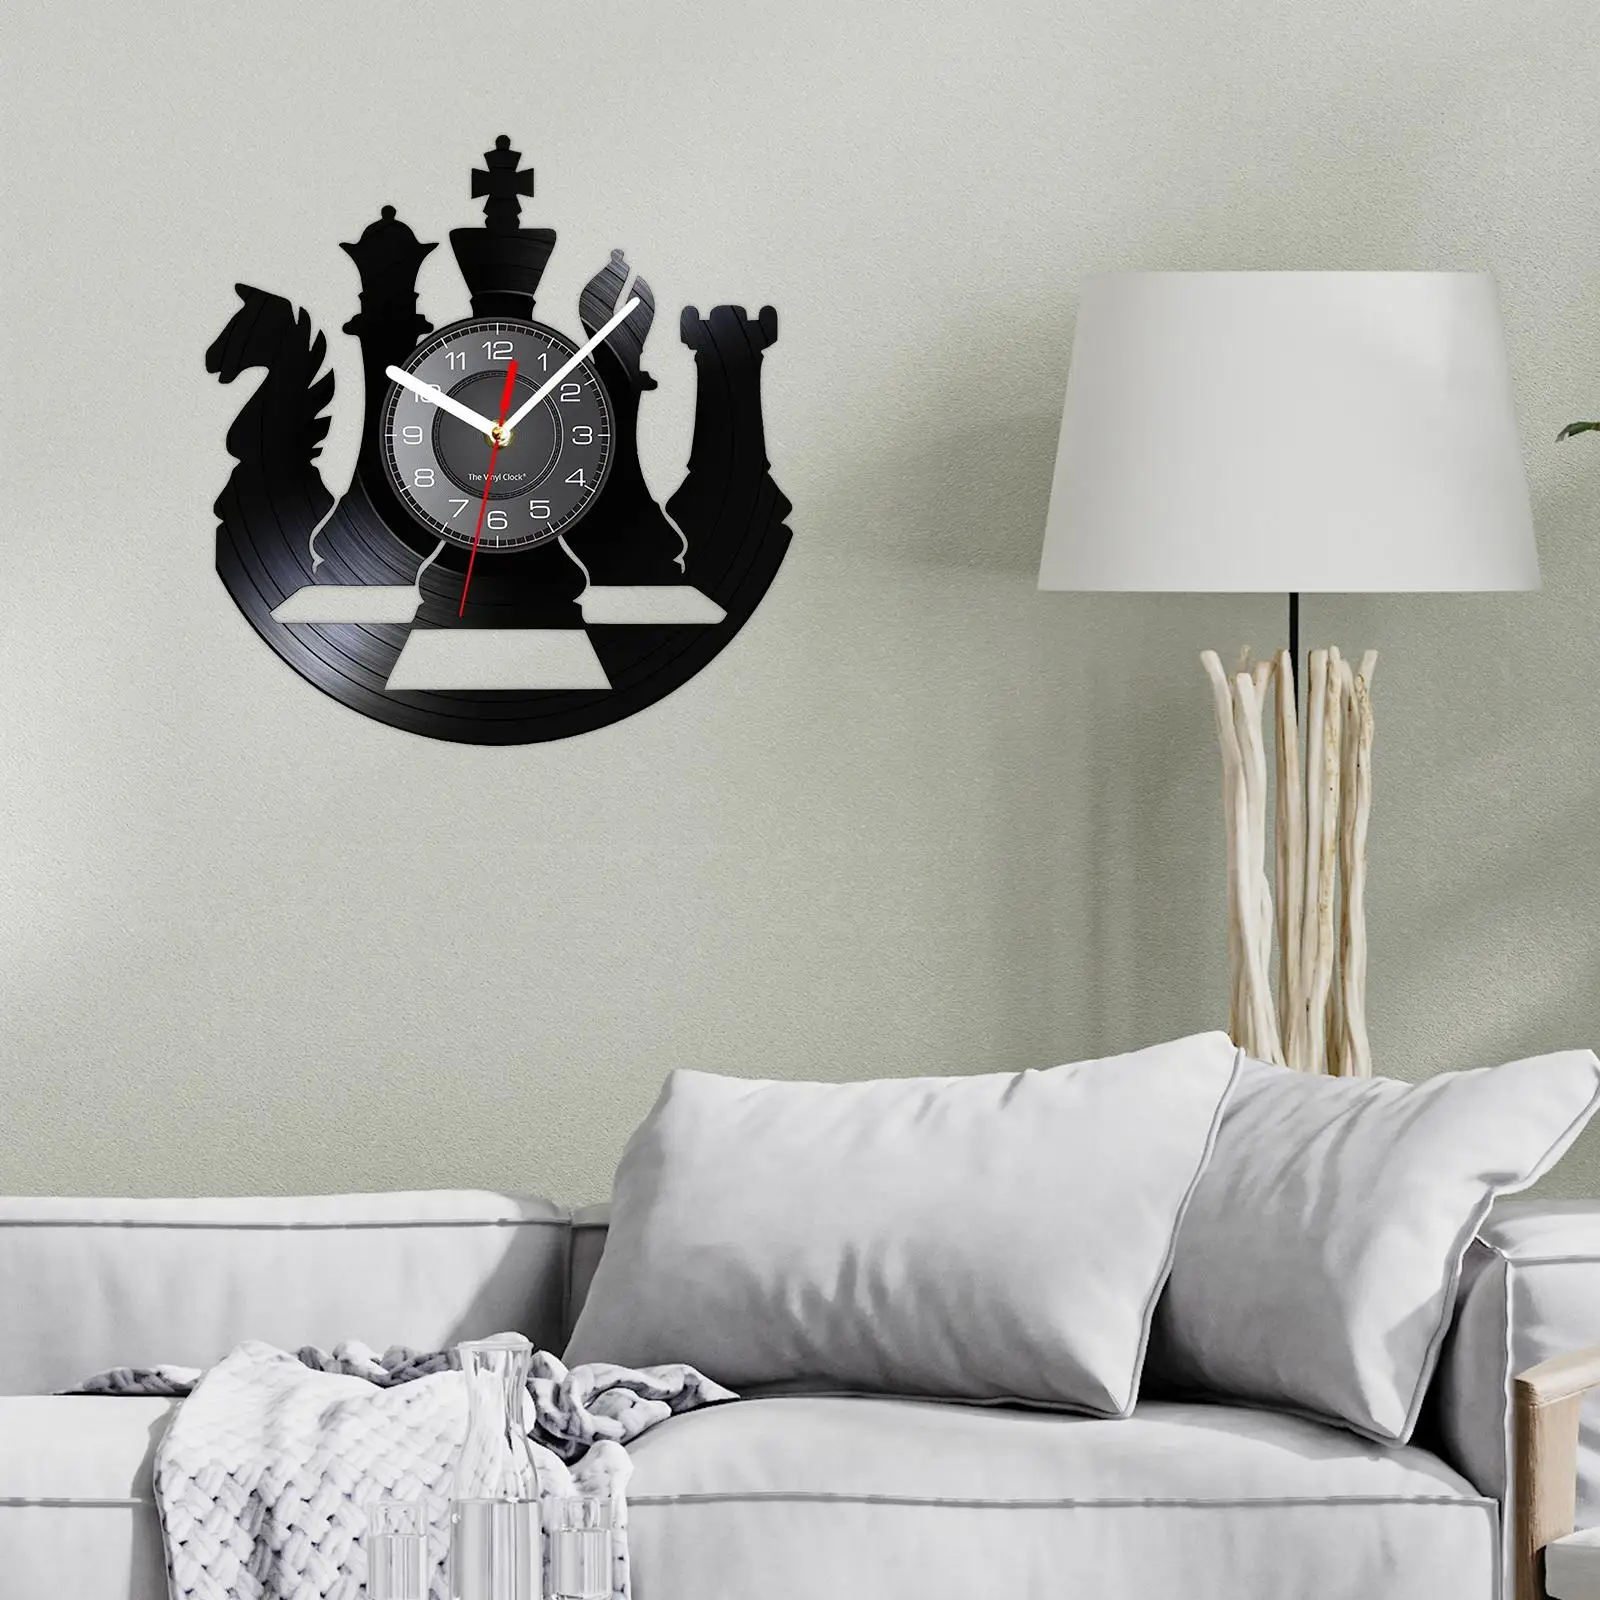 Vinyl Record Wall Clock 12inch Decorative Lightweight Quiet Hanging Clock Bedroom for Shop Cafe Living Room Restaurant